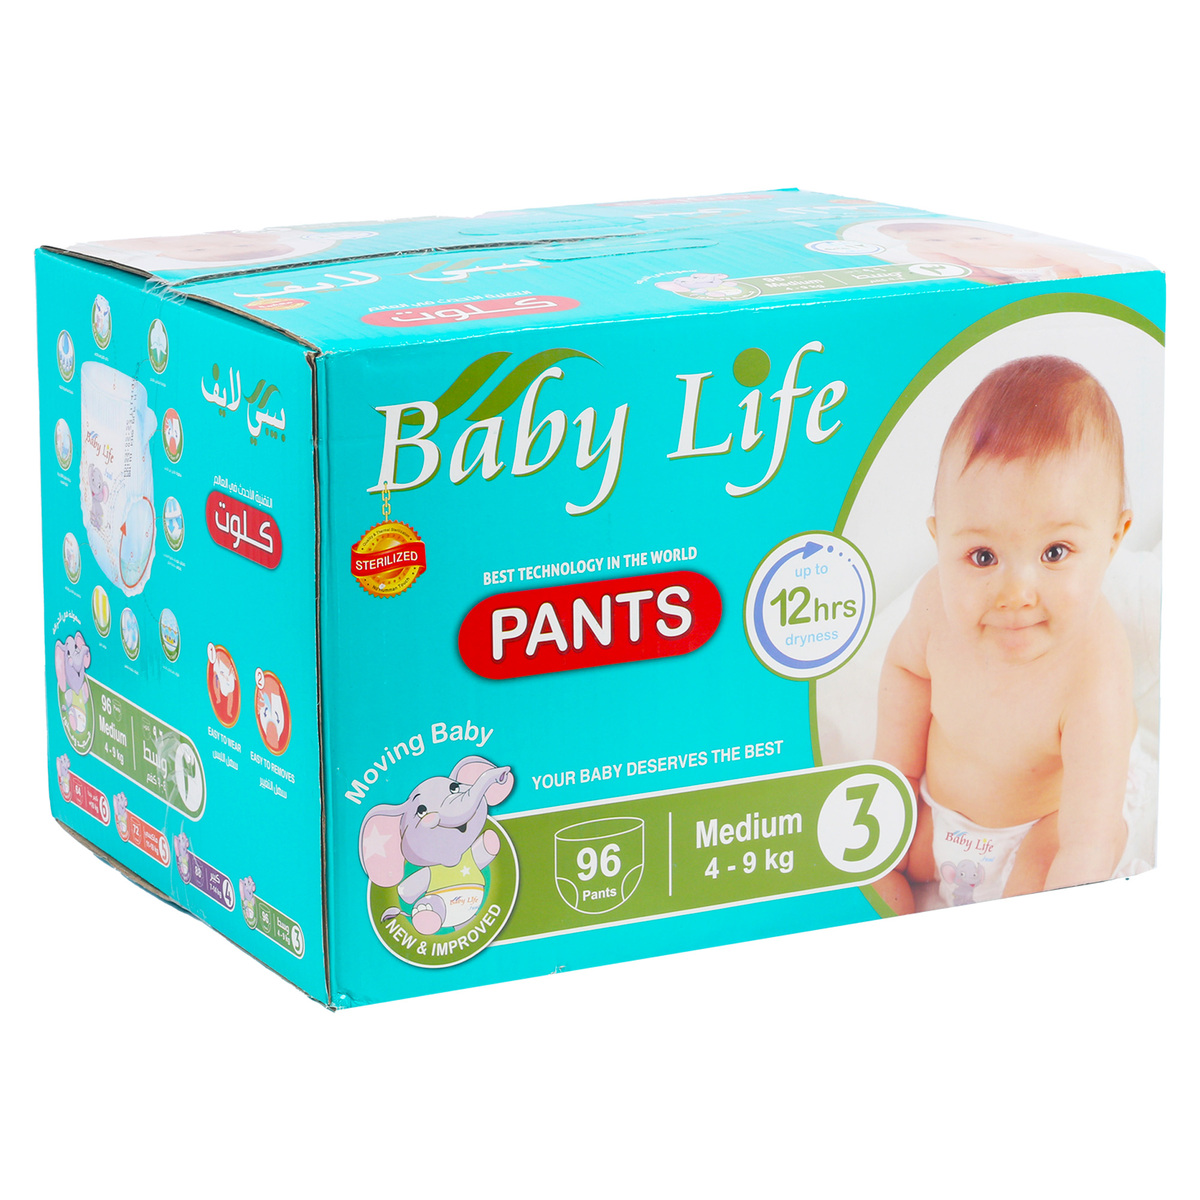 Baby Life Diaper Pants Medium Size 3 4-9 kg Value Pack 96 pcs